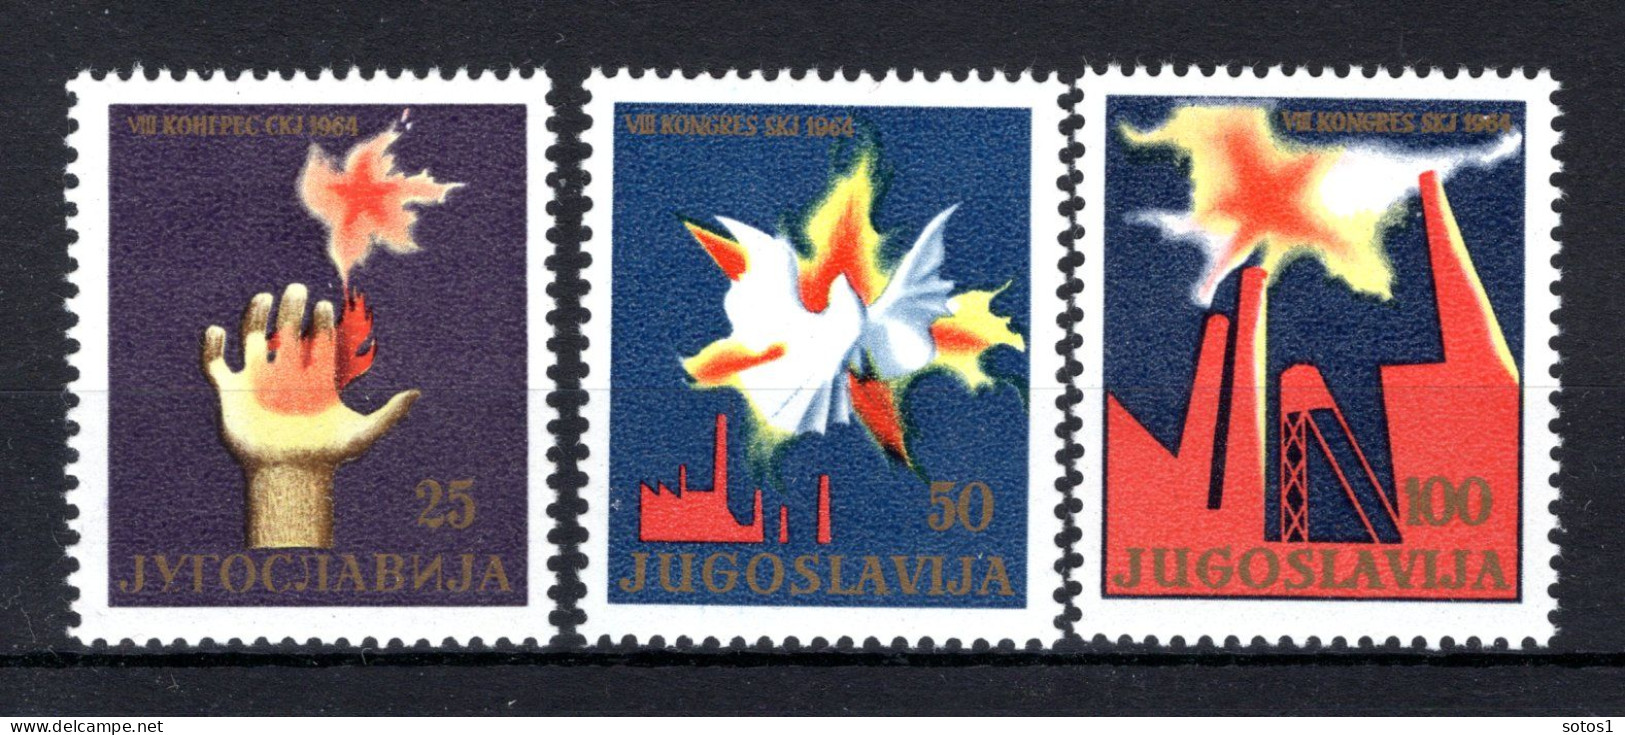 JOEGOSLAVIE Yt. 998/1000 MNH 1964 - Neufs